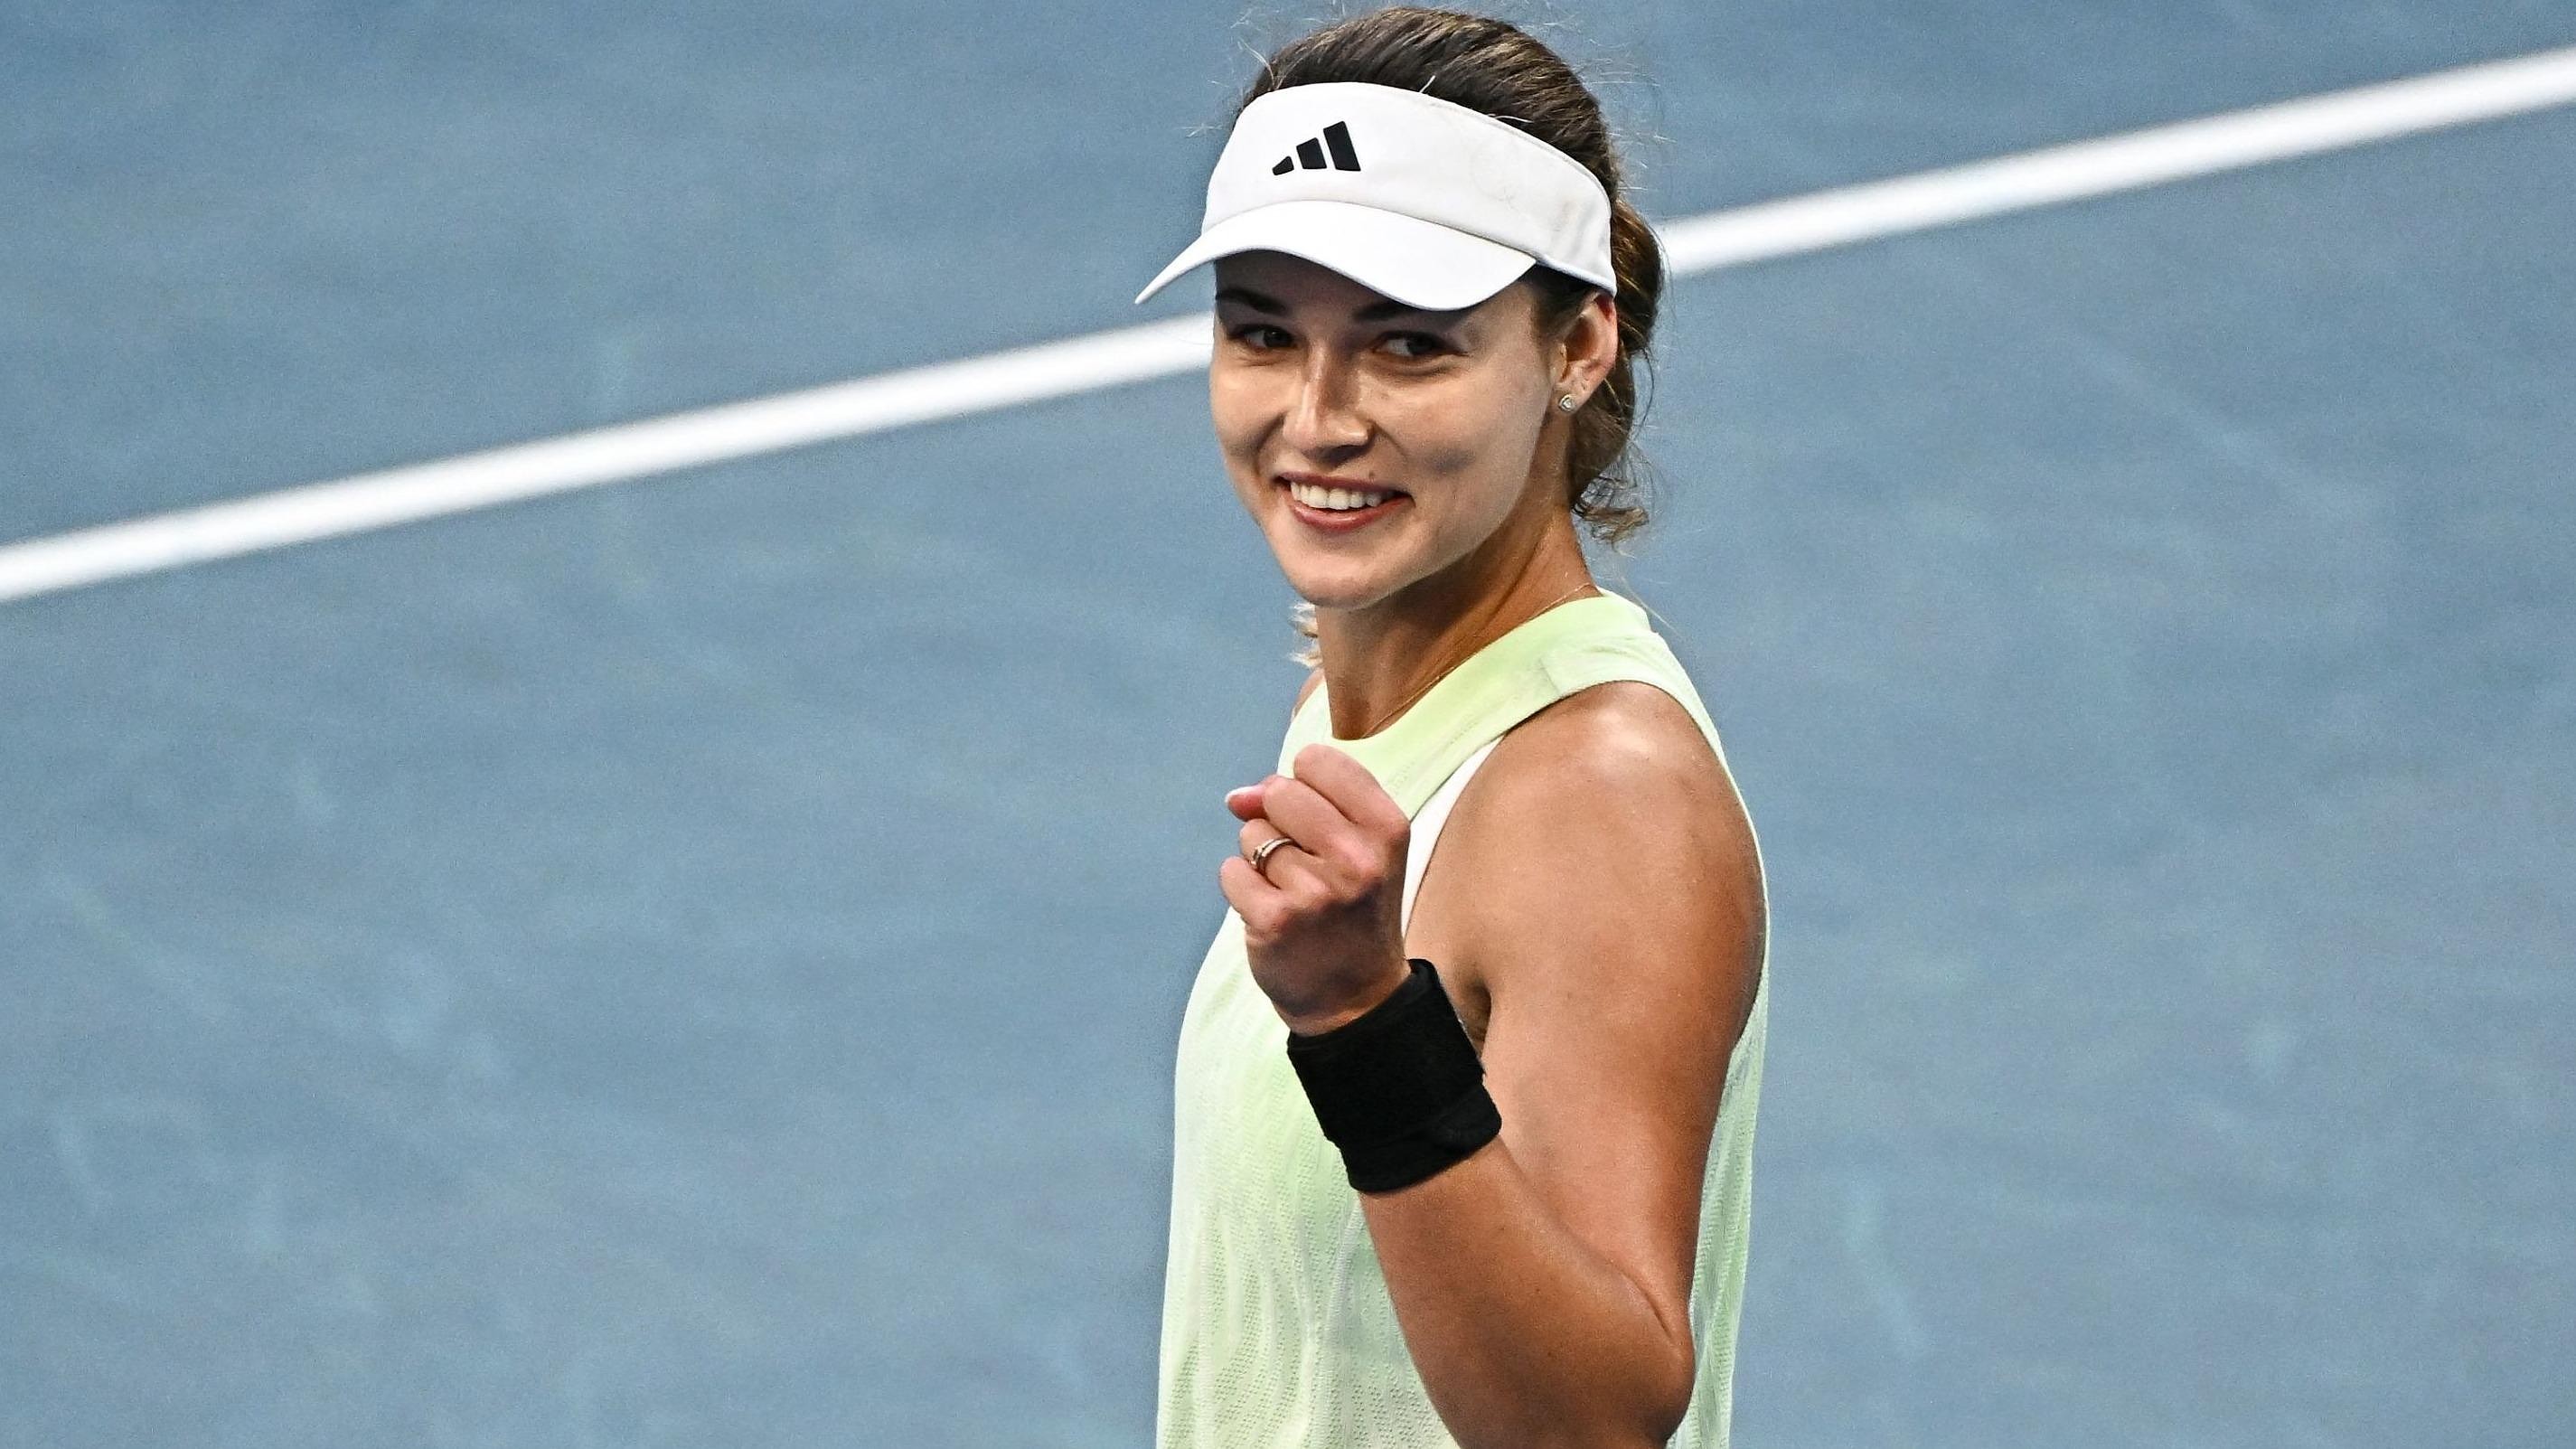 Australian Open: Kalinskaya qualified for her first Grand Slam quarter-final